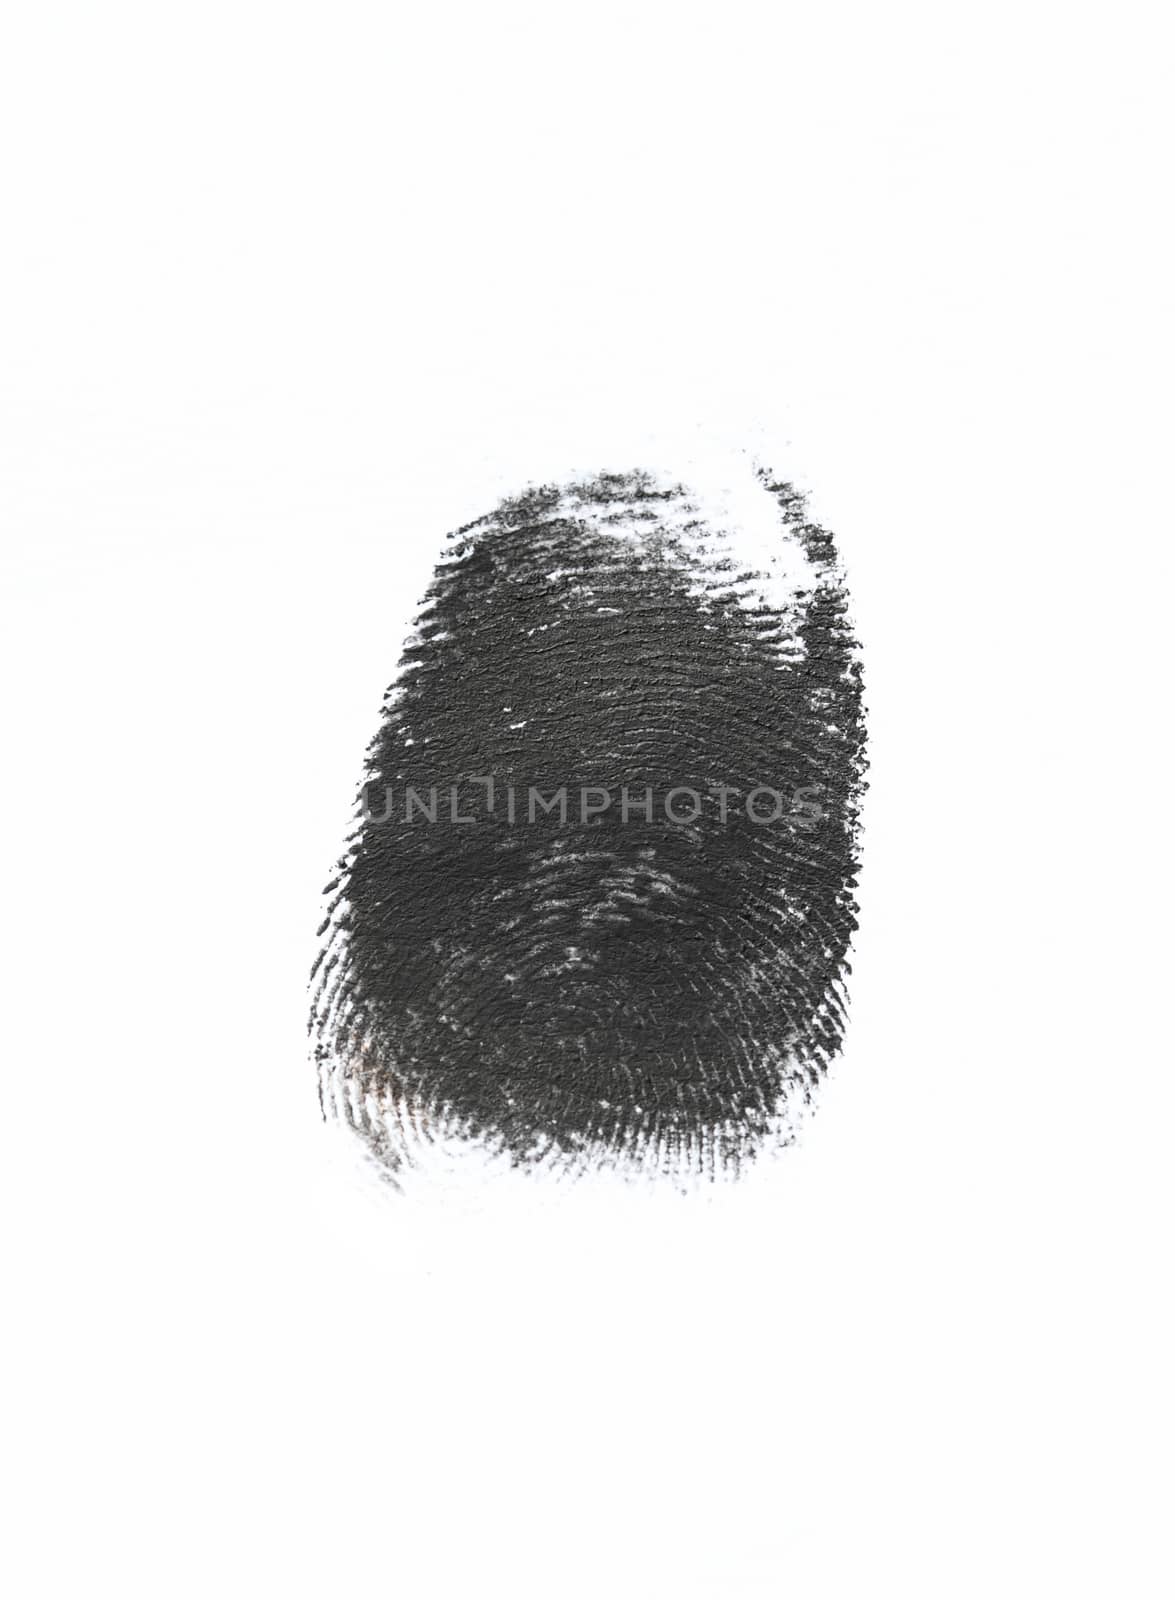 On a photo fingerprint isolated on white